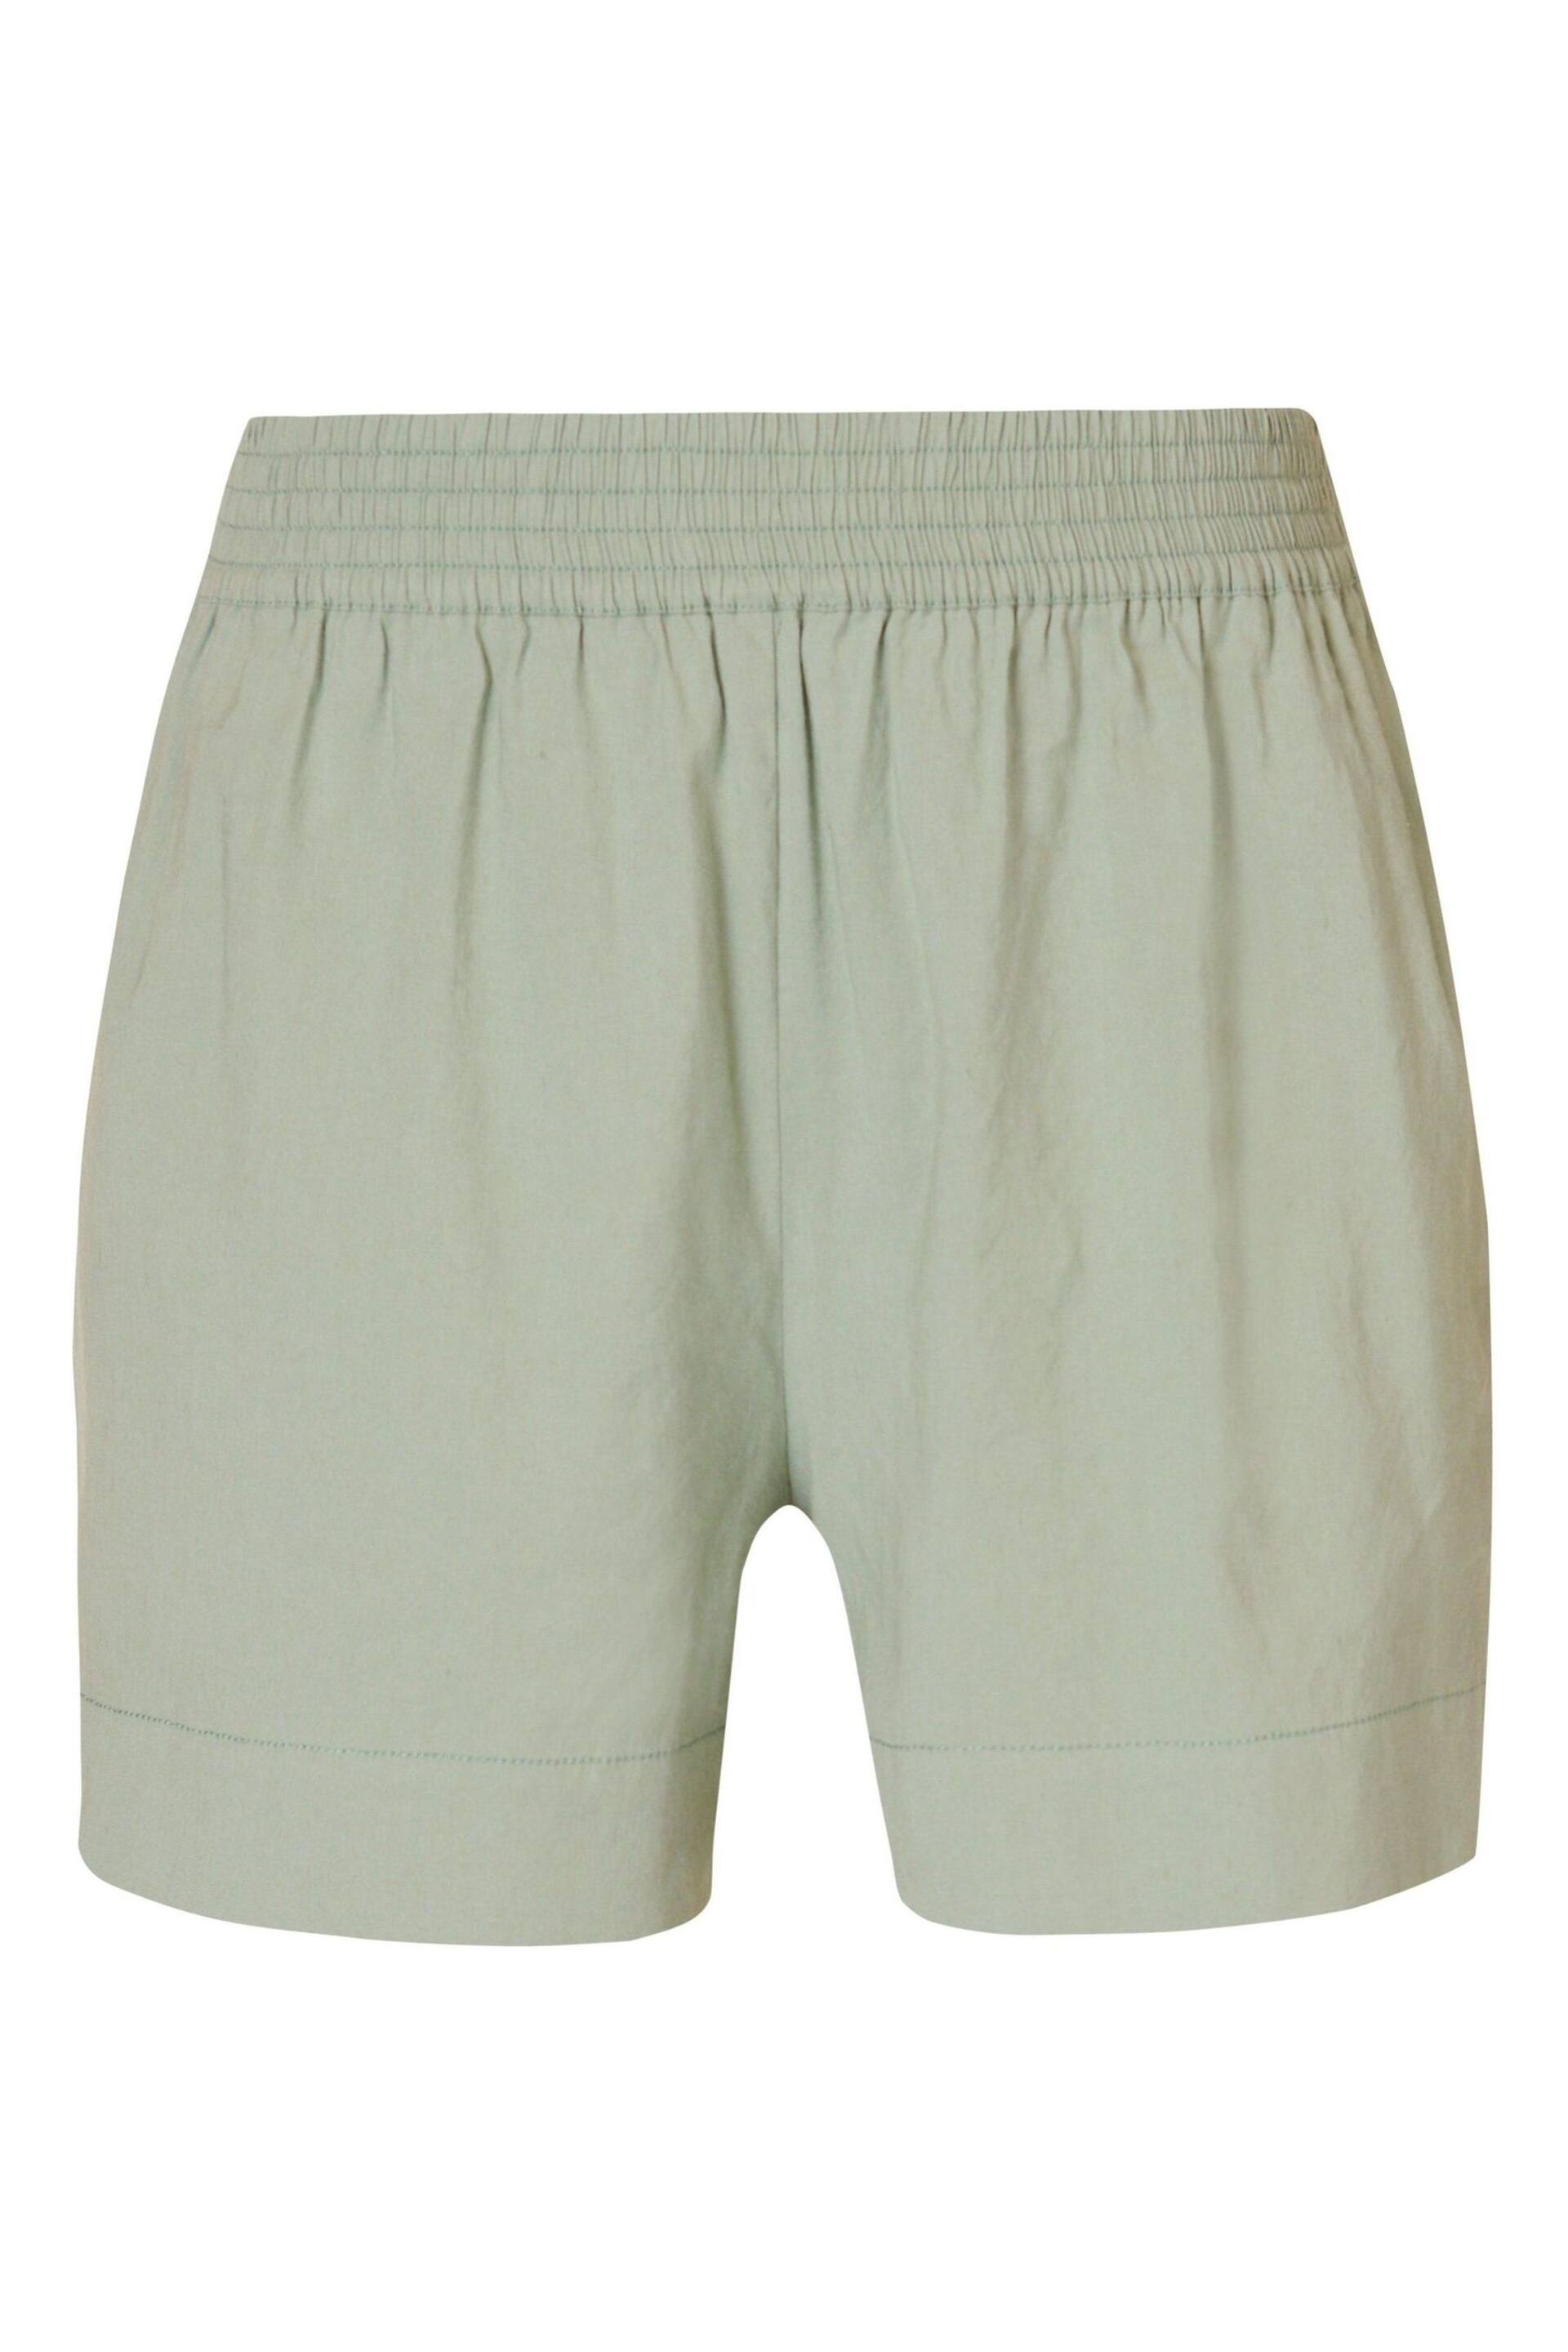 Sweaty Betty Savannah Green Summer Stretch Linen Shorts - Image 6 of 6